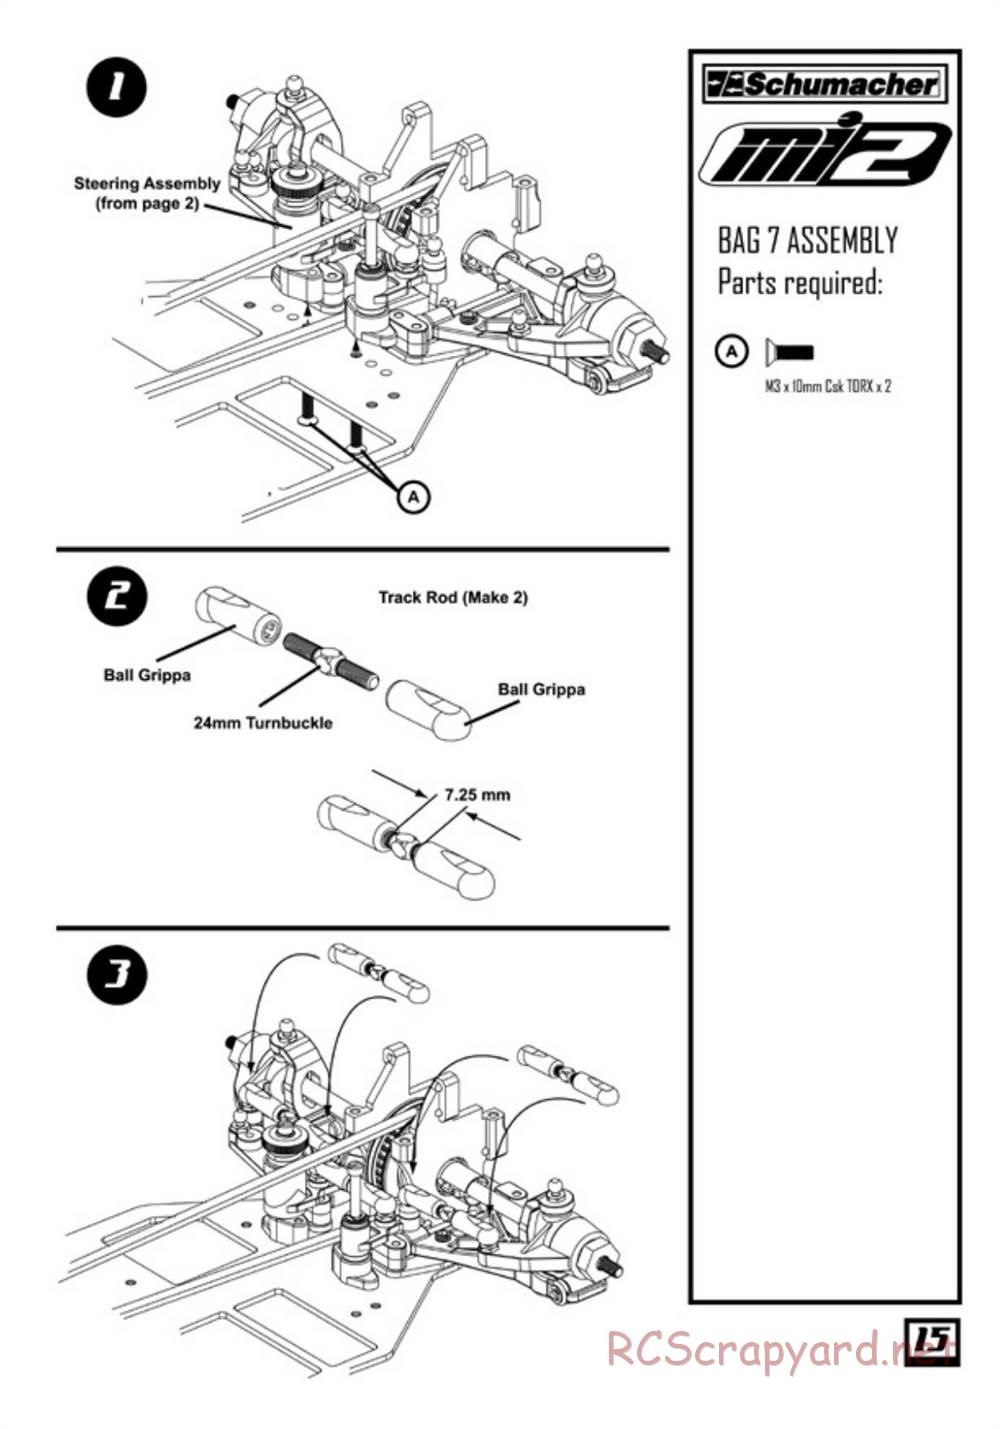 Schumacher - Mi2 - Manual - Page 17